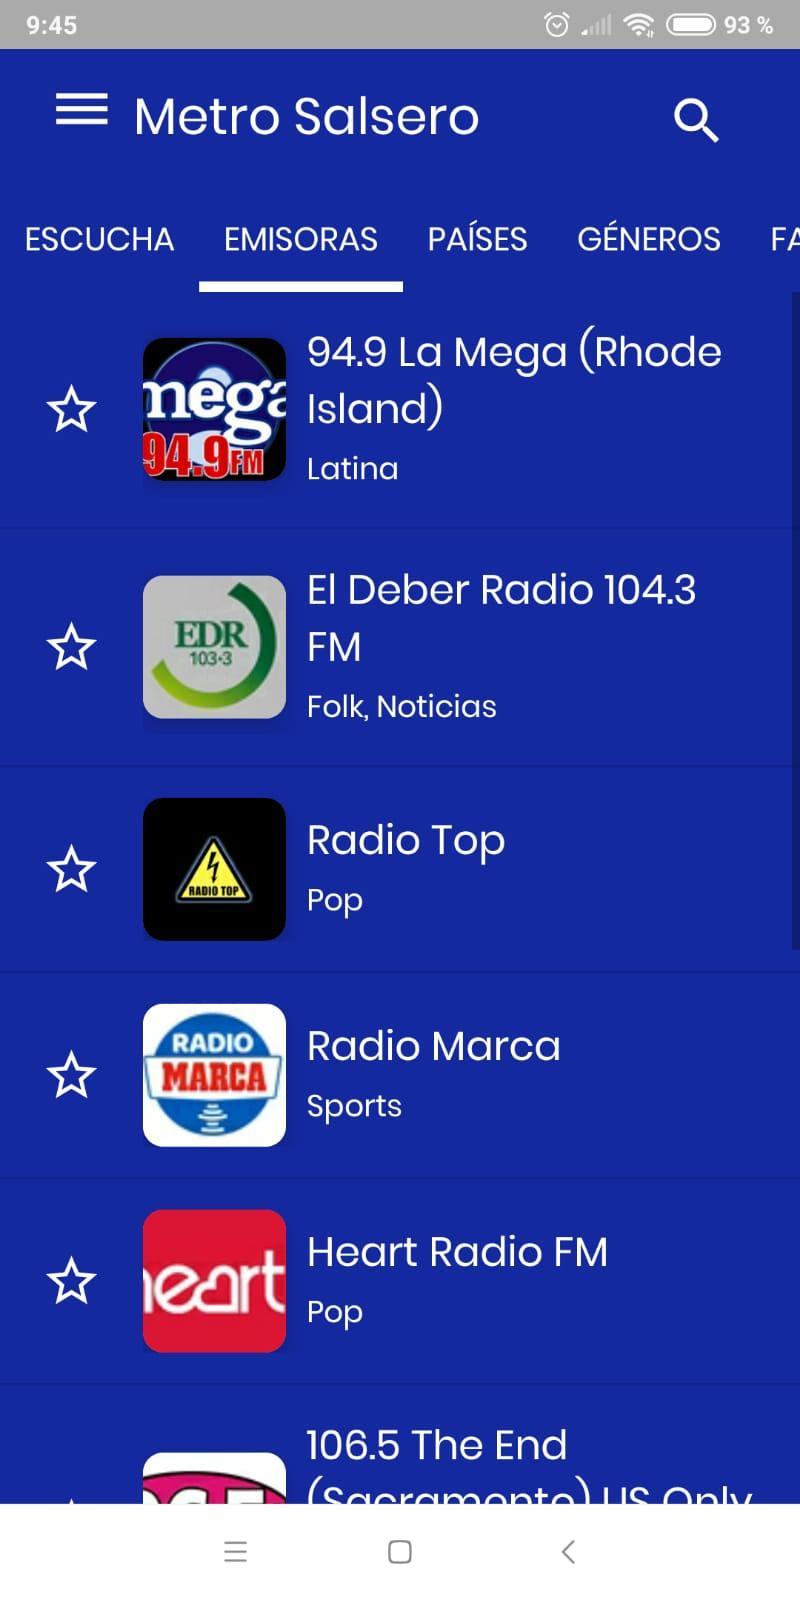 Radio Metro Salsero for Android - APK Download